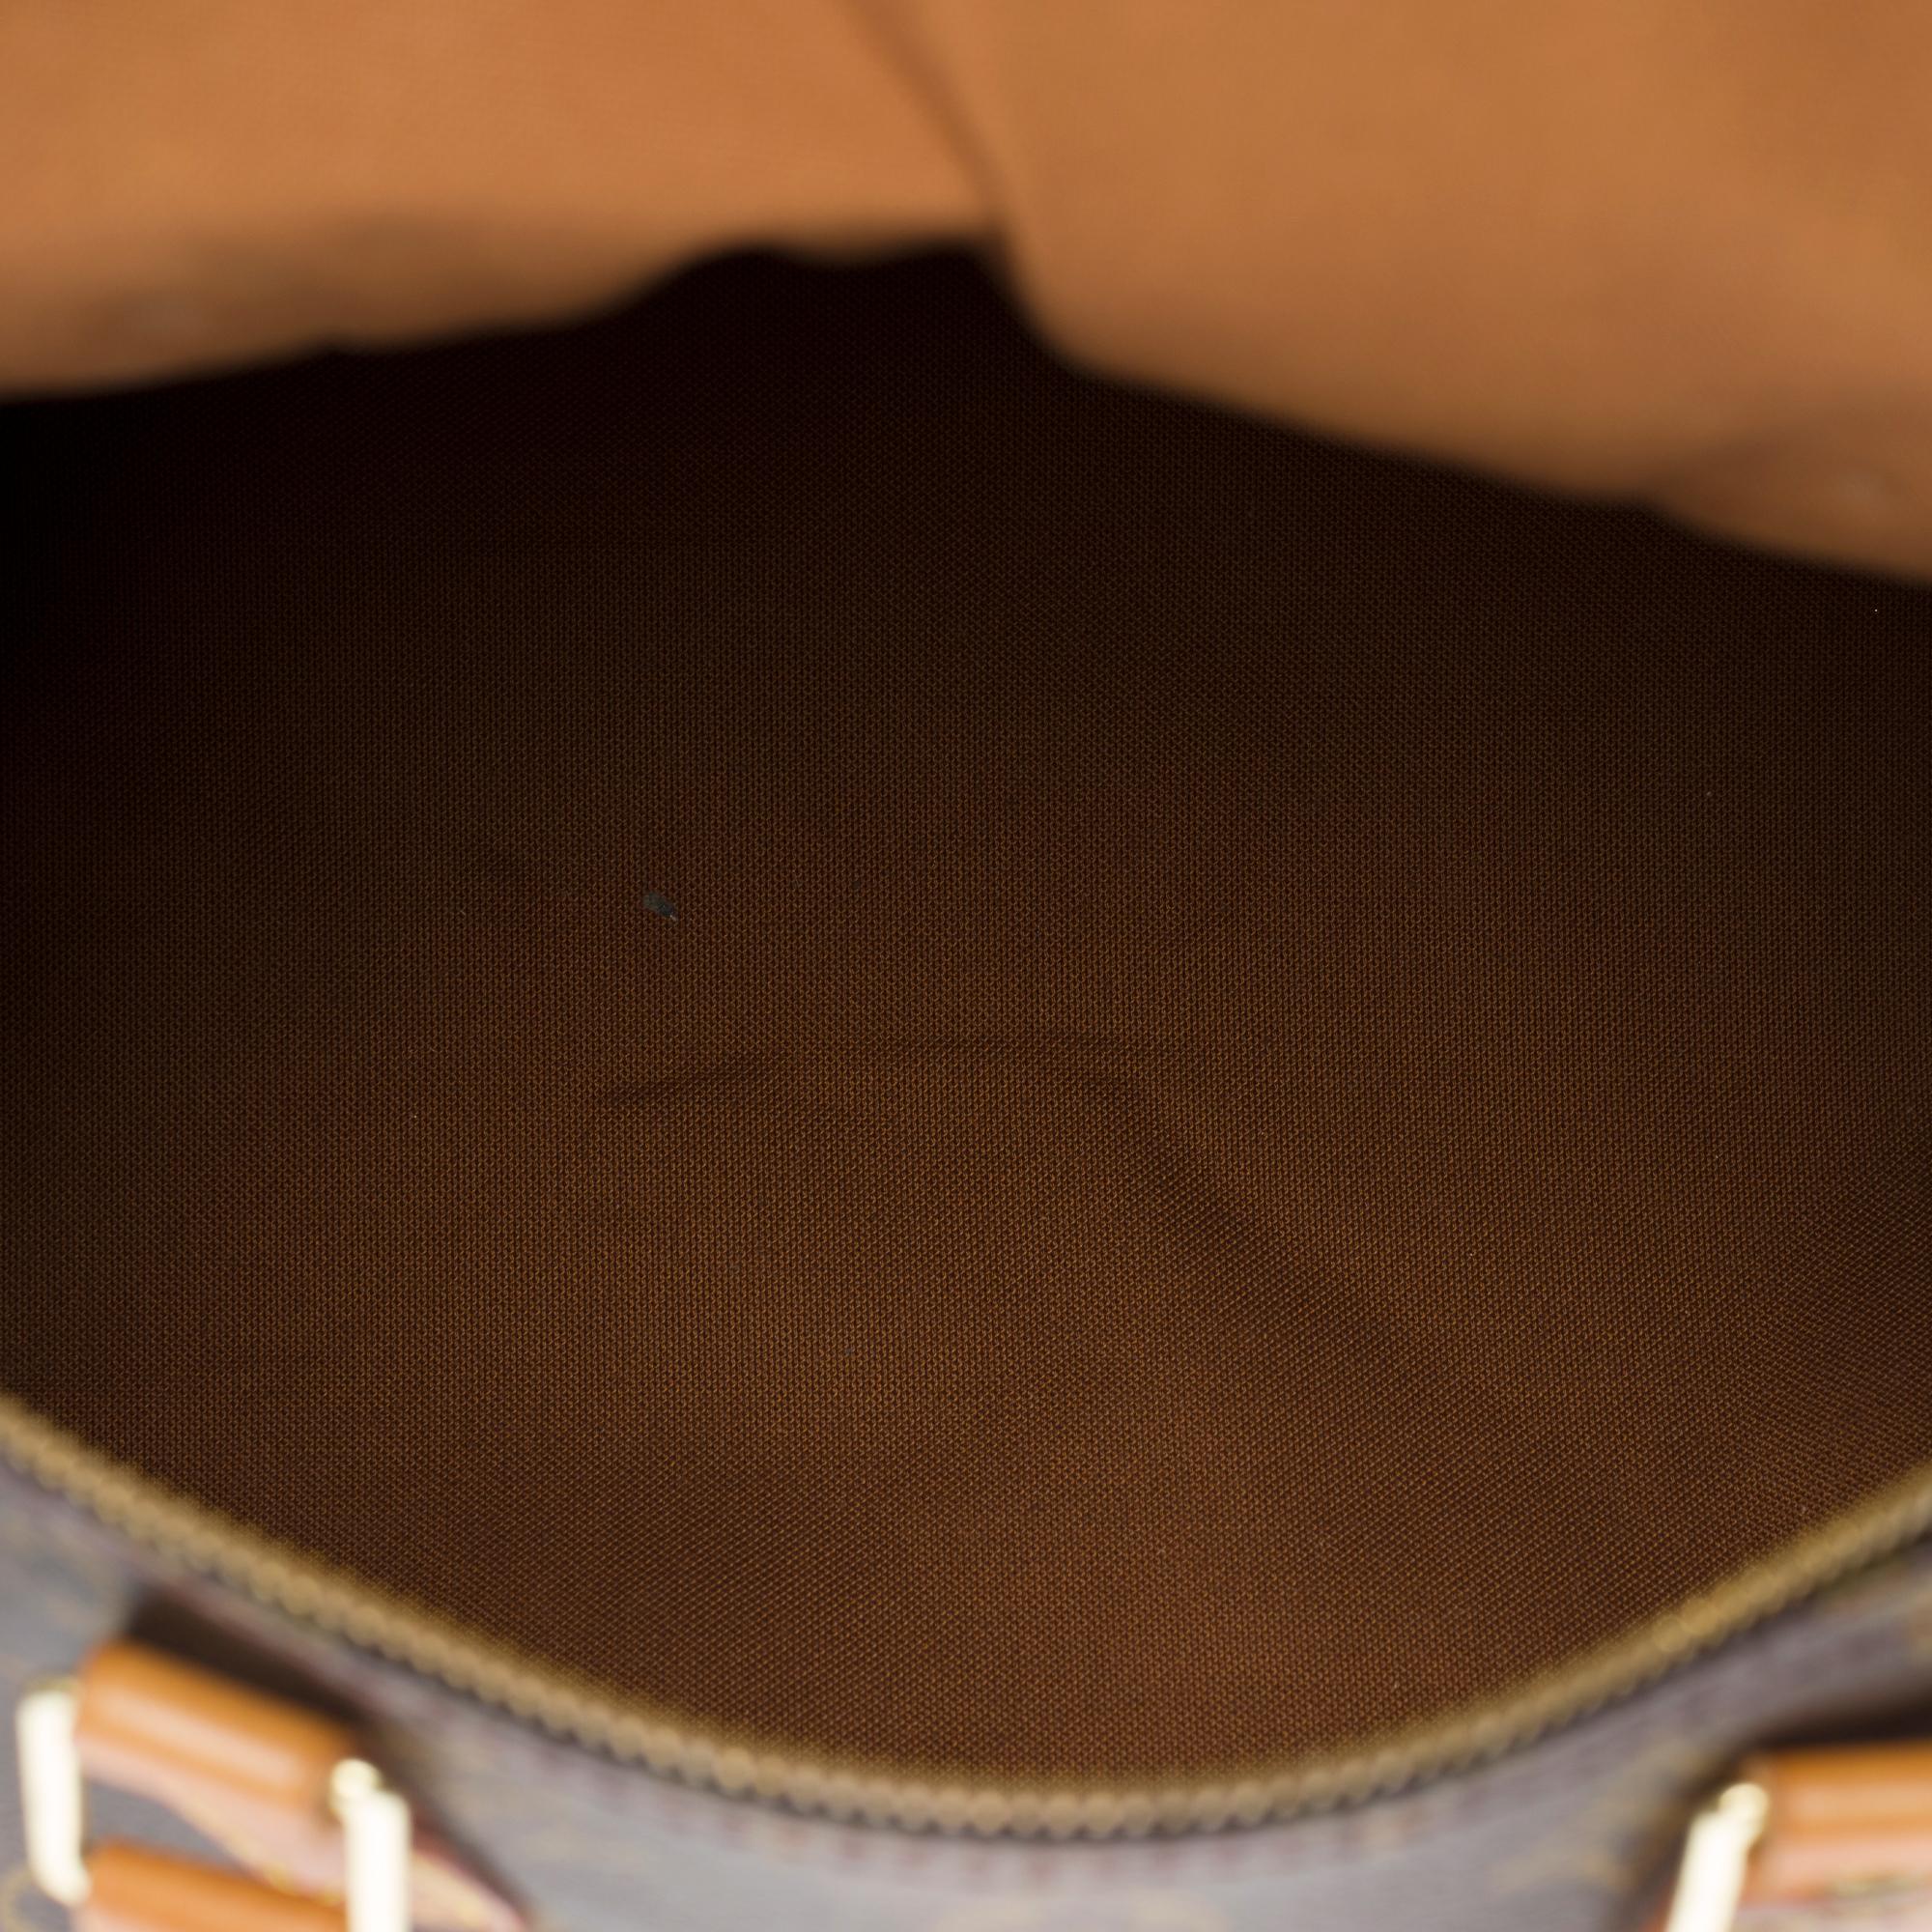 Louis Vuitton Speedy 30 handbag in brown canvas 2